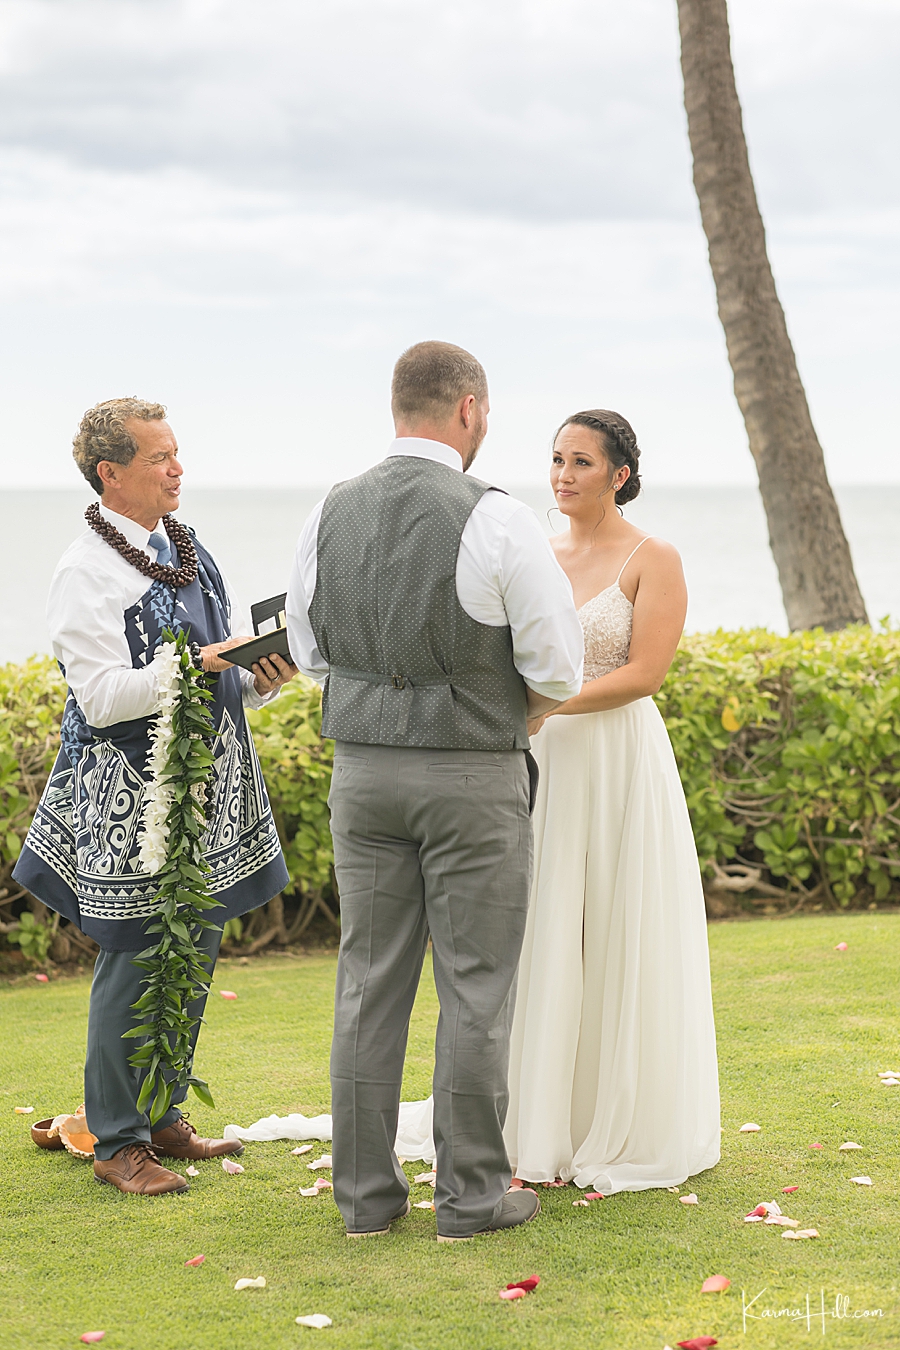 Hawaii Destination Wedding at Paradise Cove Luau